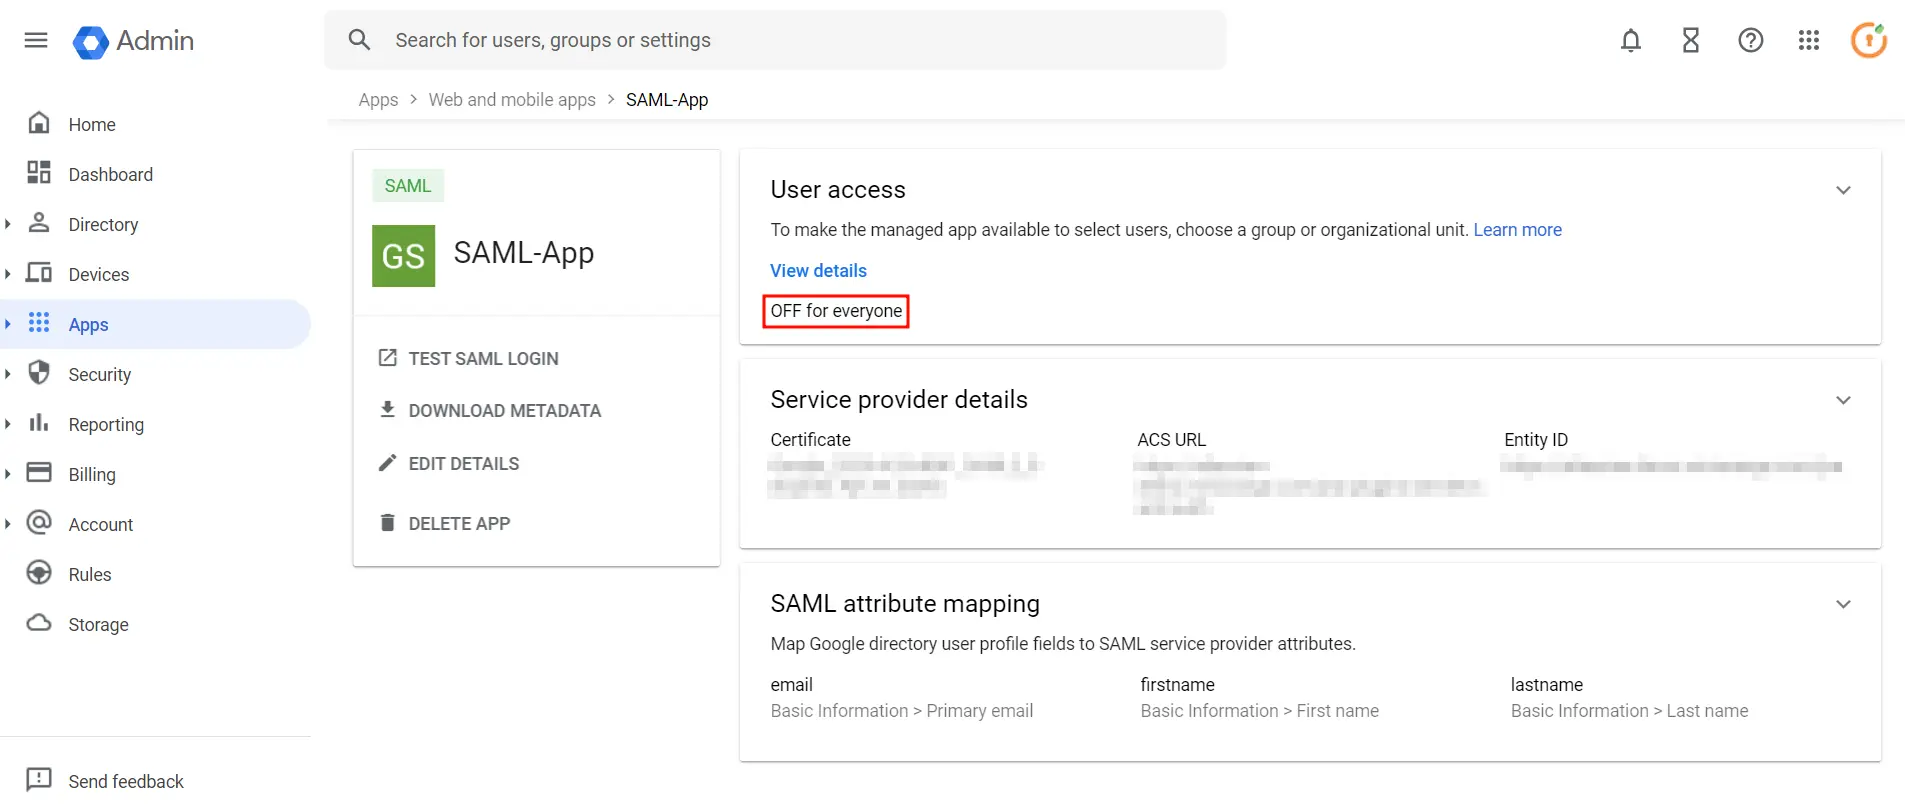 SAML App's user access option